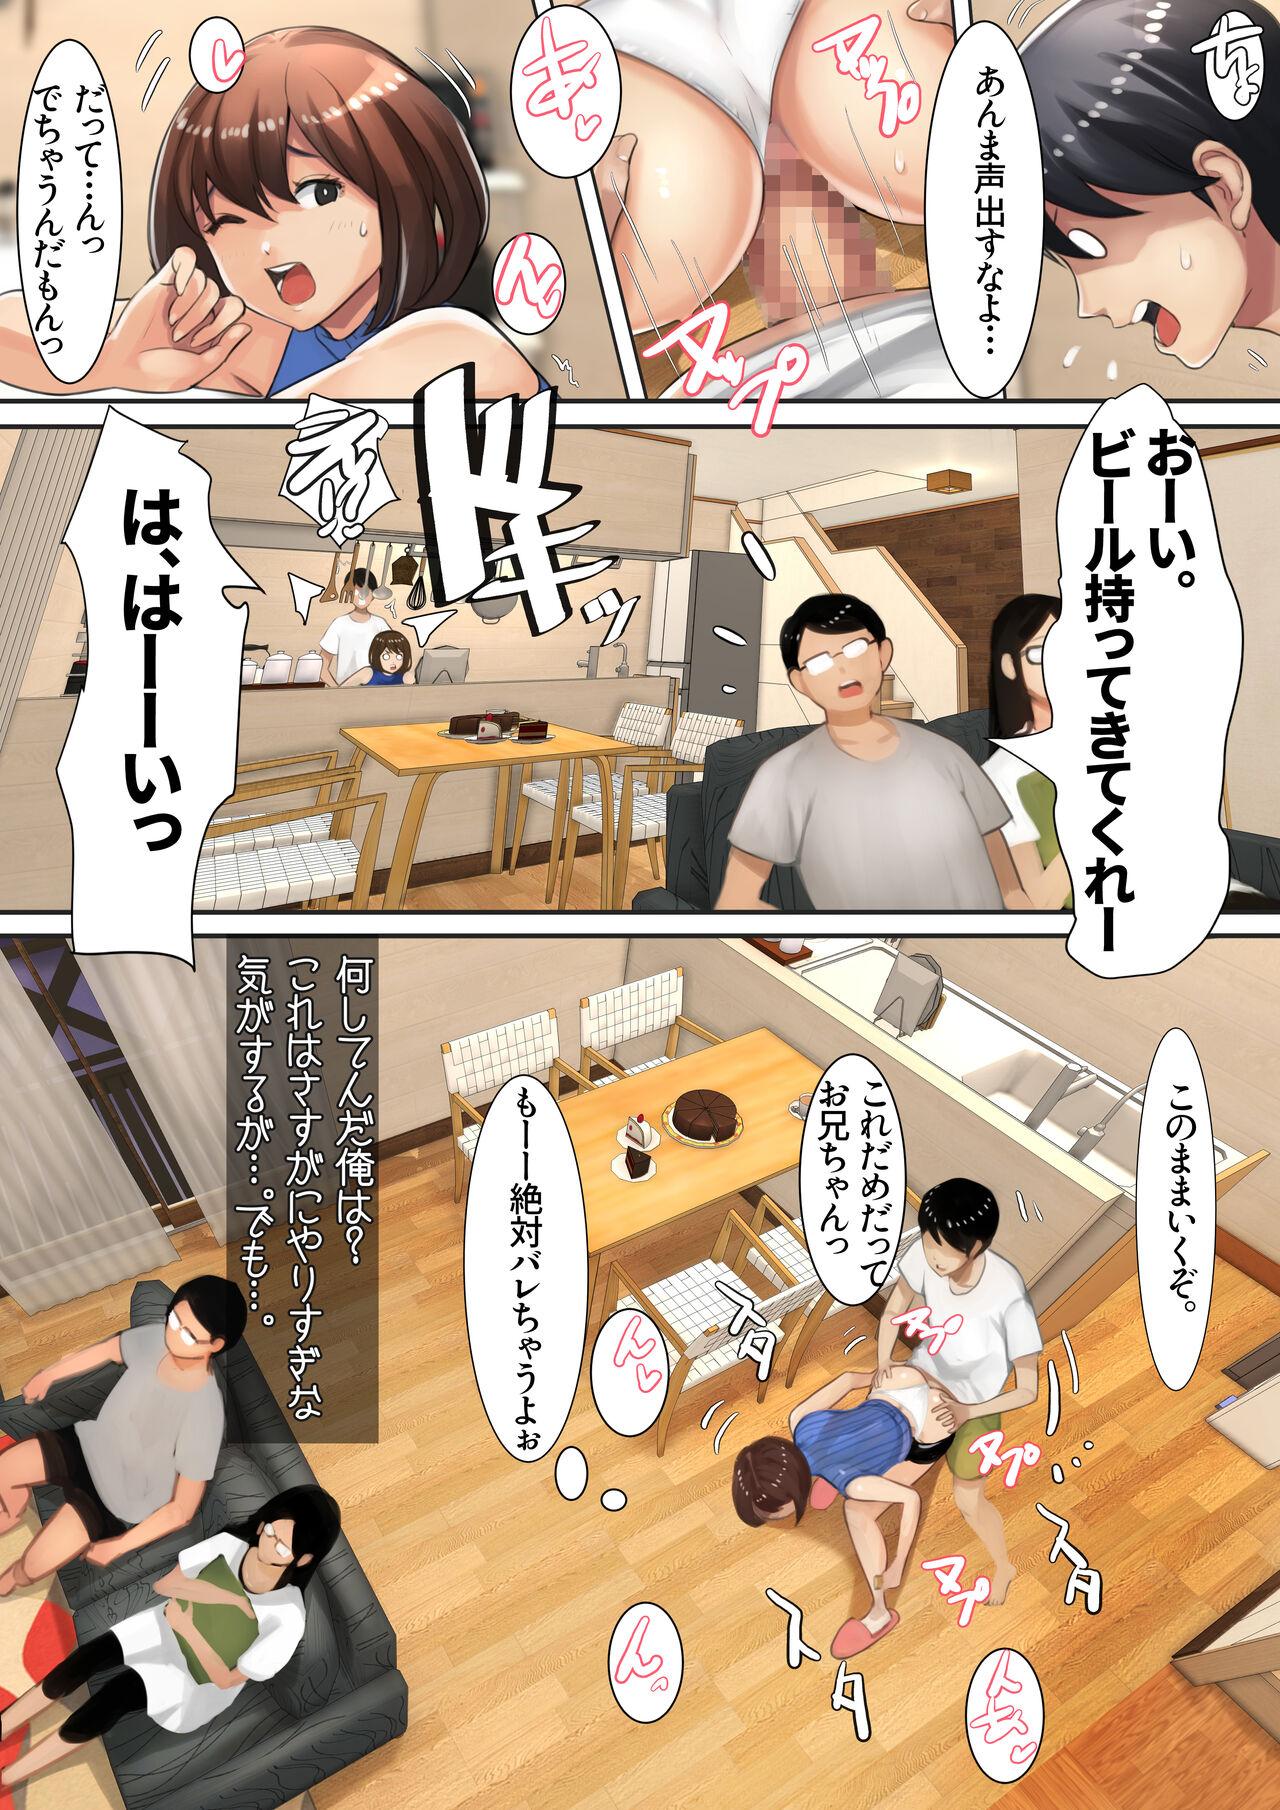 [Ama Natsuna] Imouto SS (Short Story) vol. 4 26